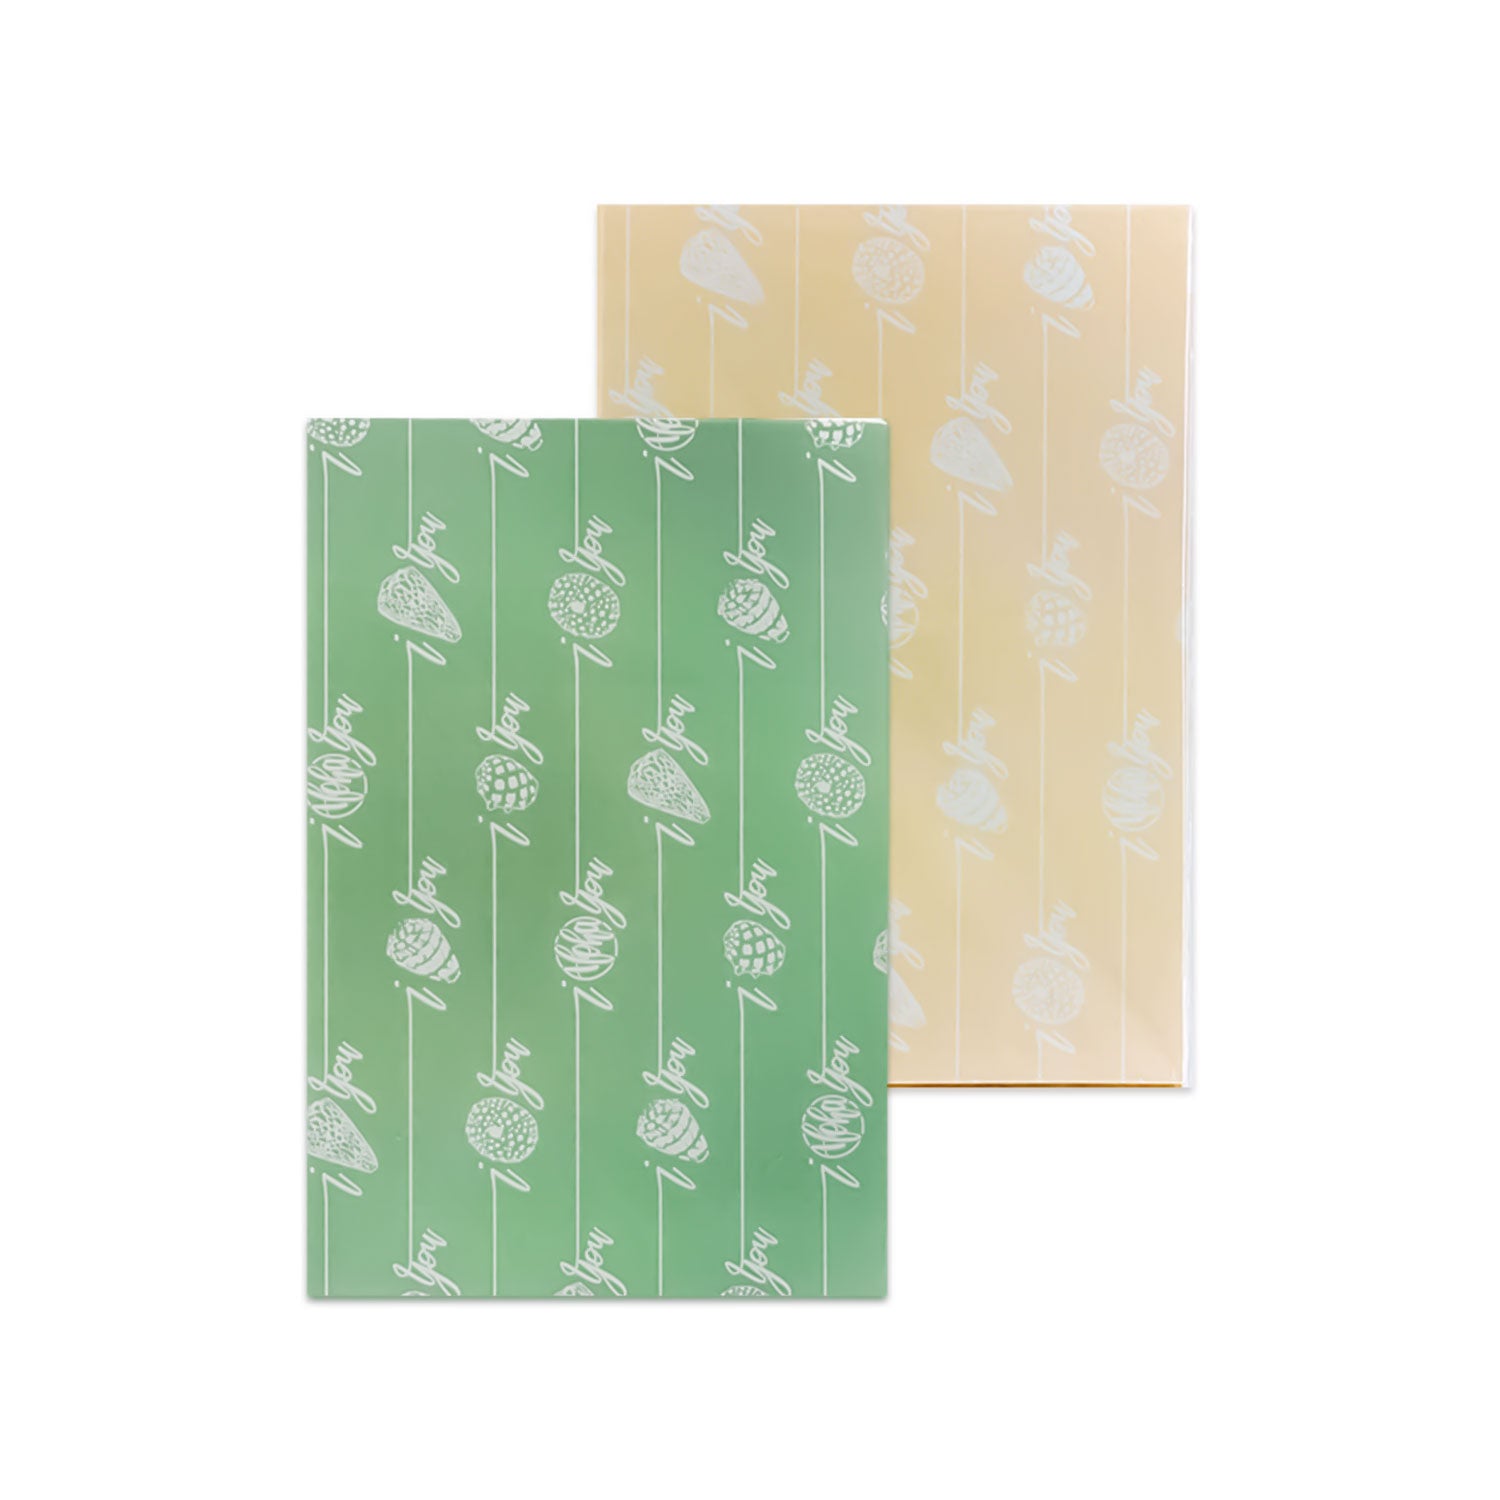 Hawaiian Greeting Cards 4"x6" 6 Pack - I Love You Shell